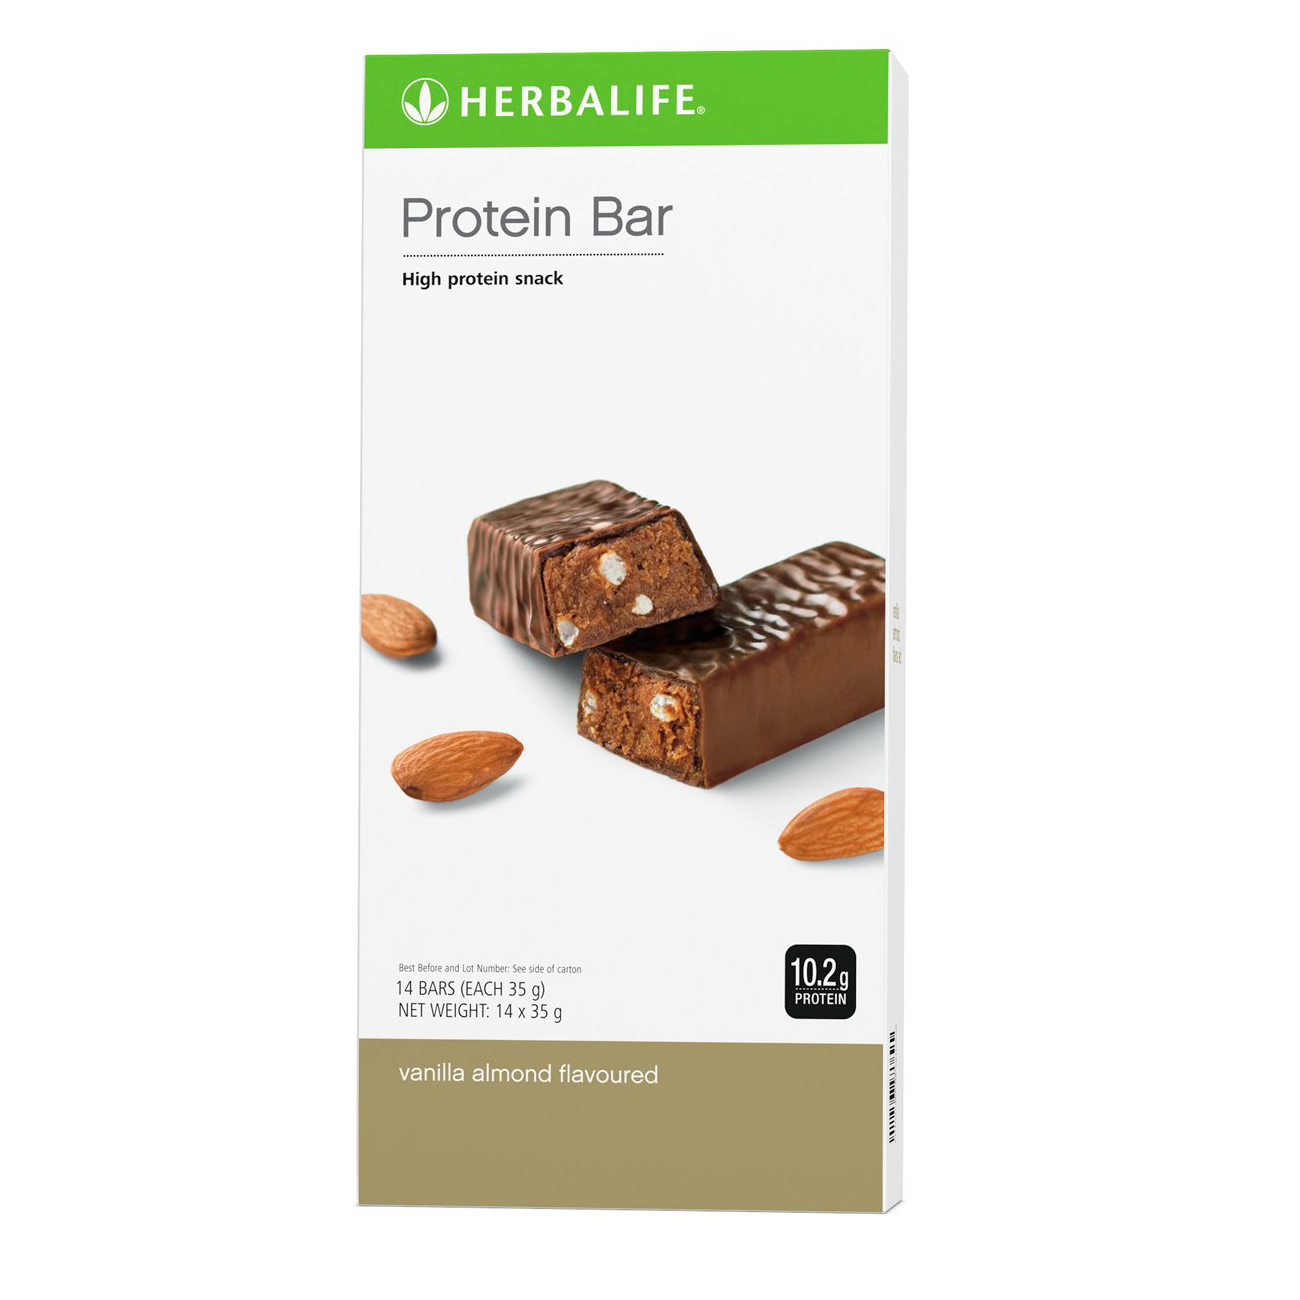 Protein Bars  Vanilla Almond product shot.